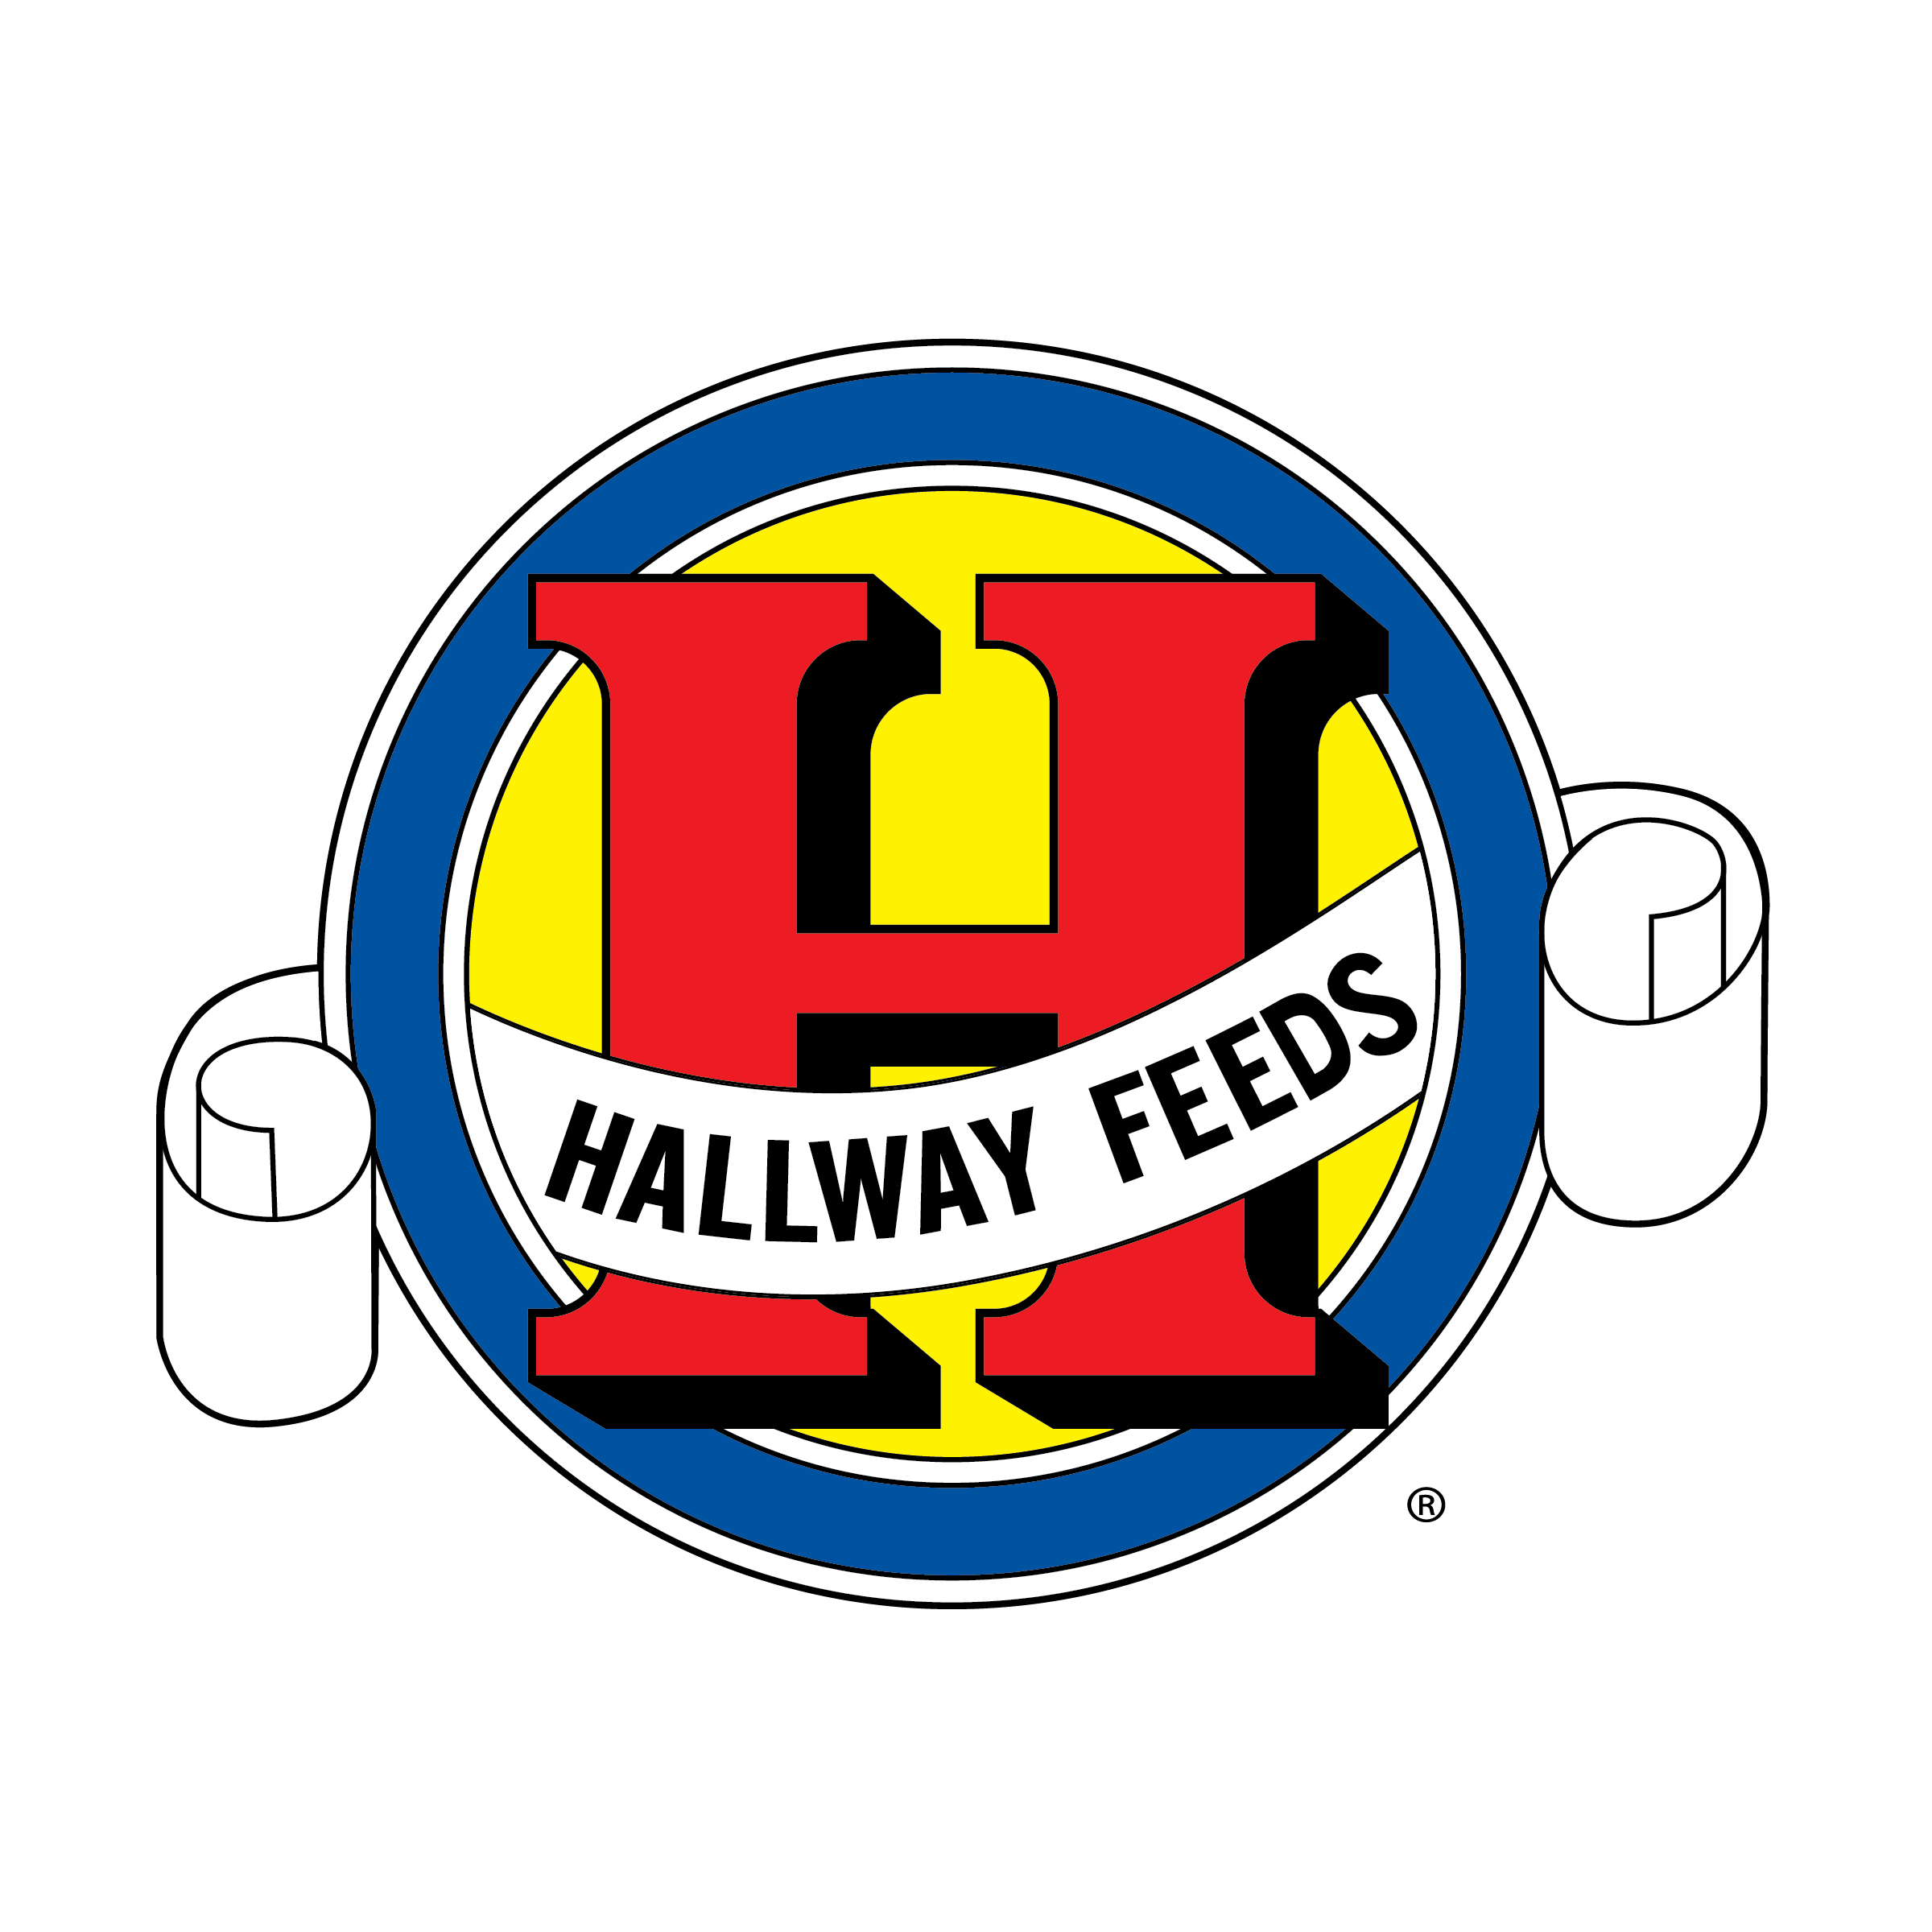 A logo of the company hallway feeds.